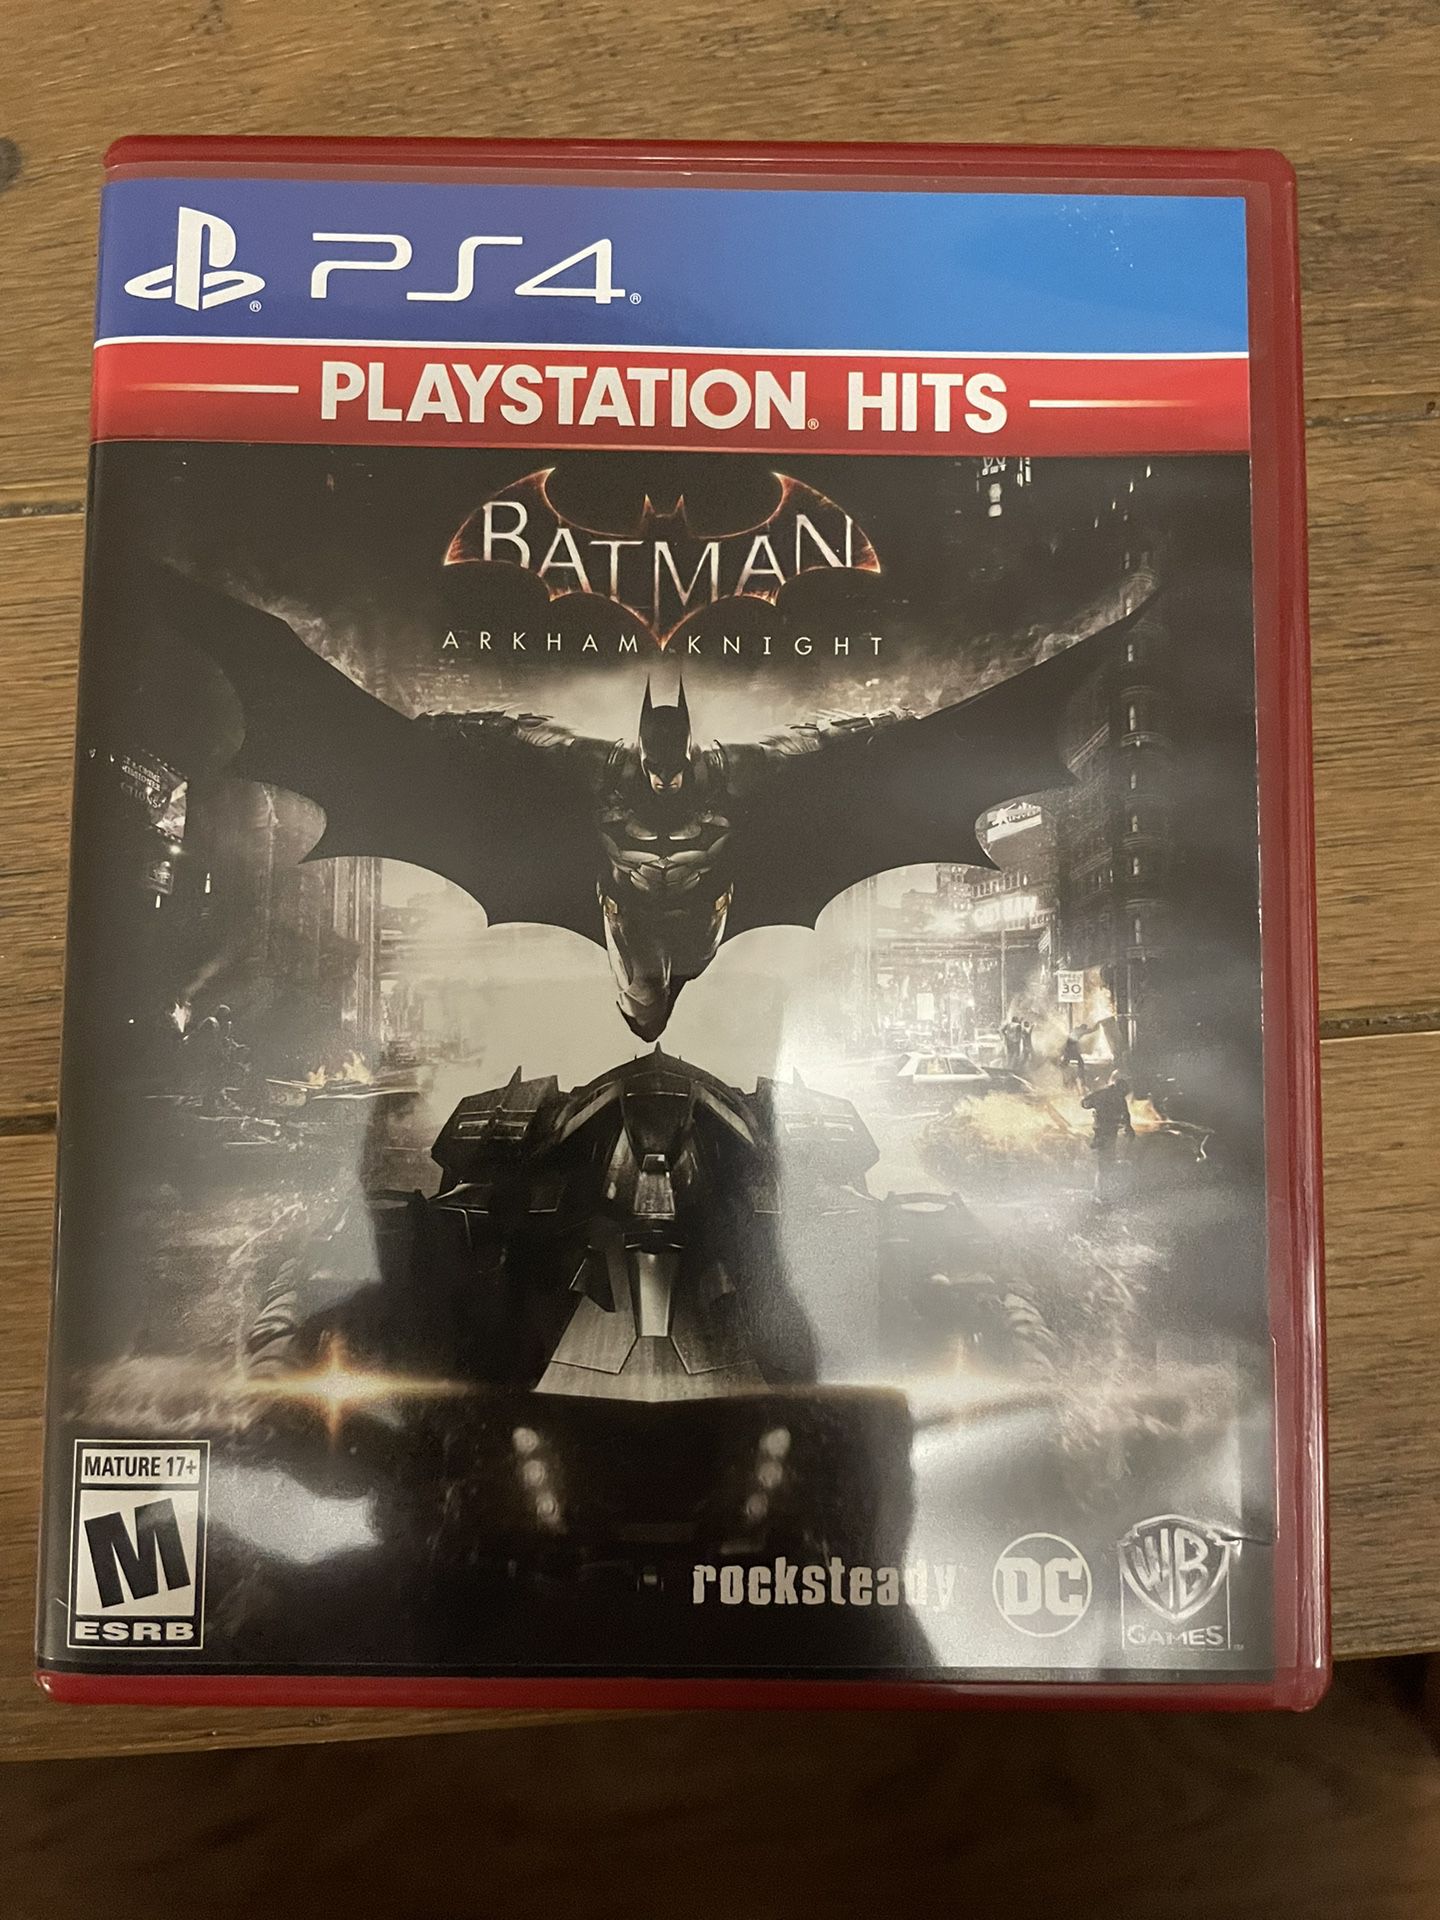 Batman Arkham Knight [ PlayStation Hits ] (PS4) NEW